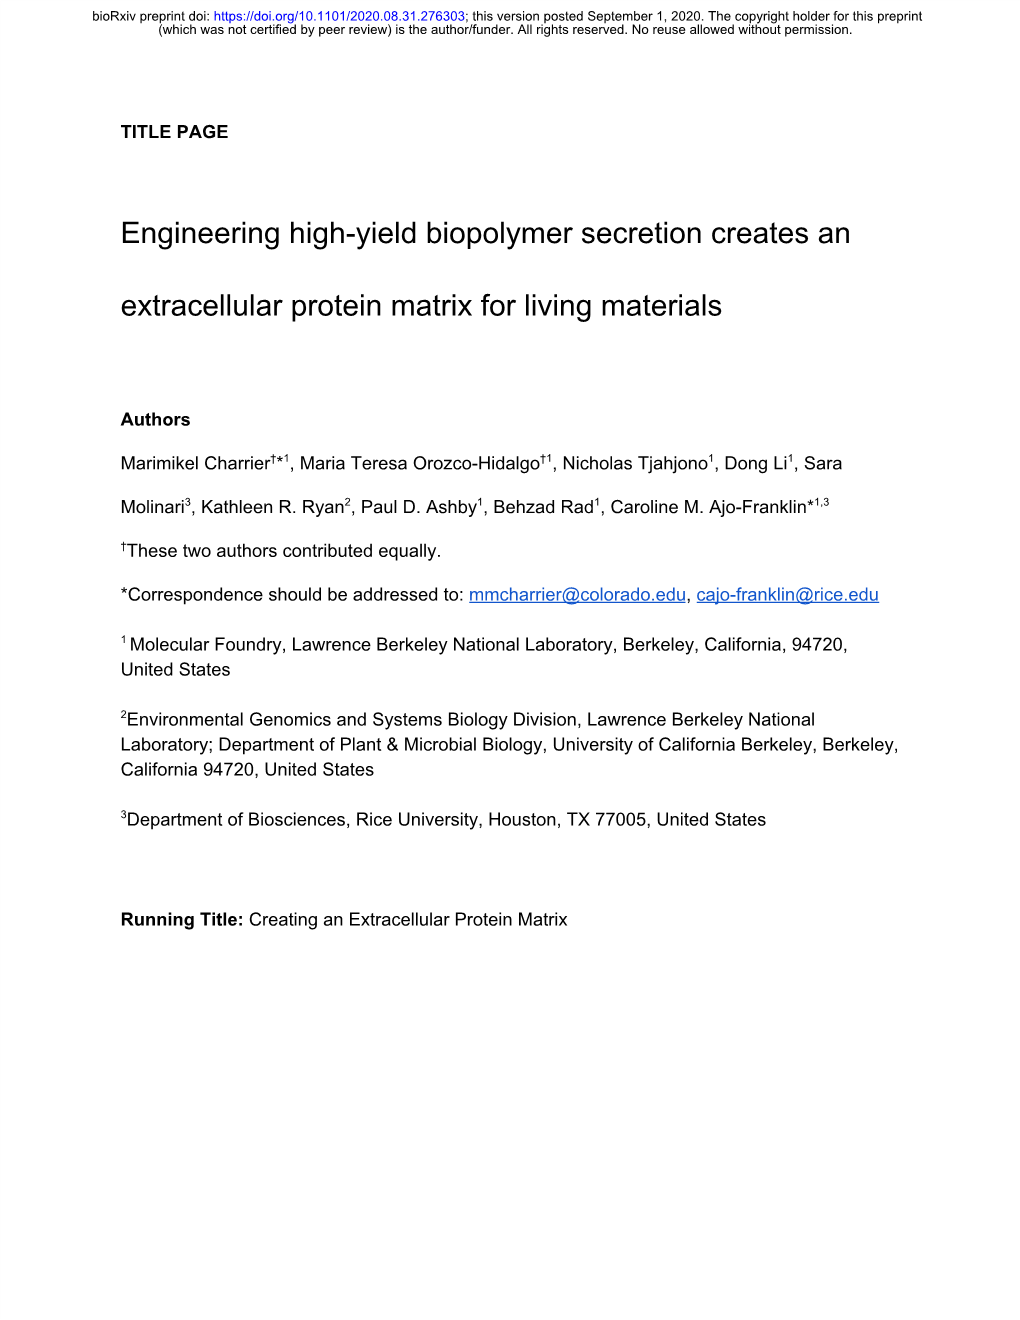 Engineering High-Yield Biopolymer Secretion Creates an Extracellular